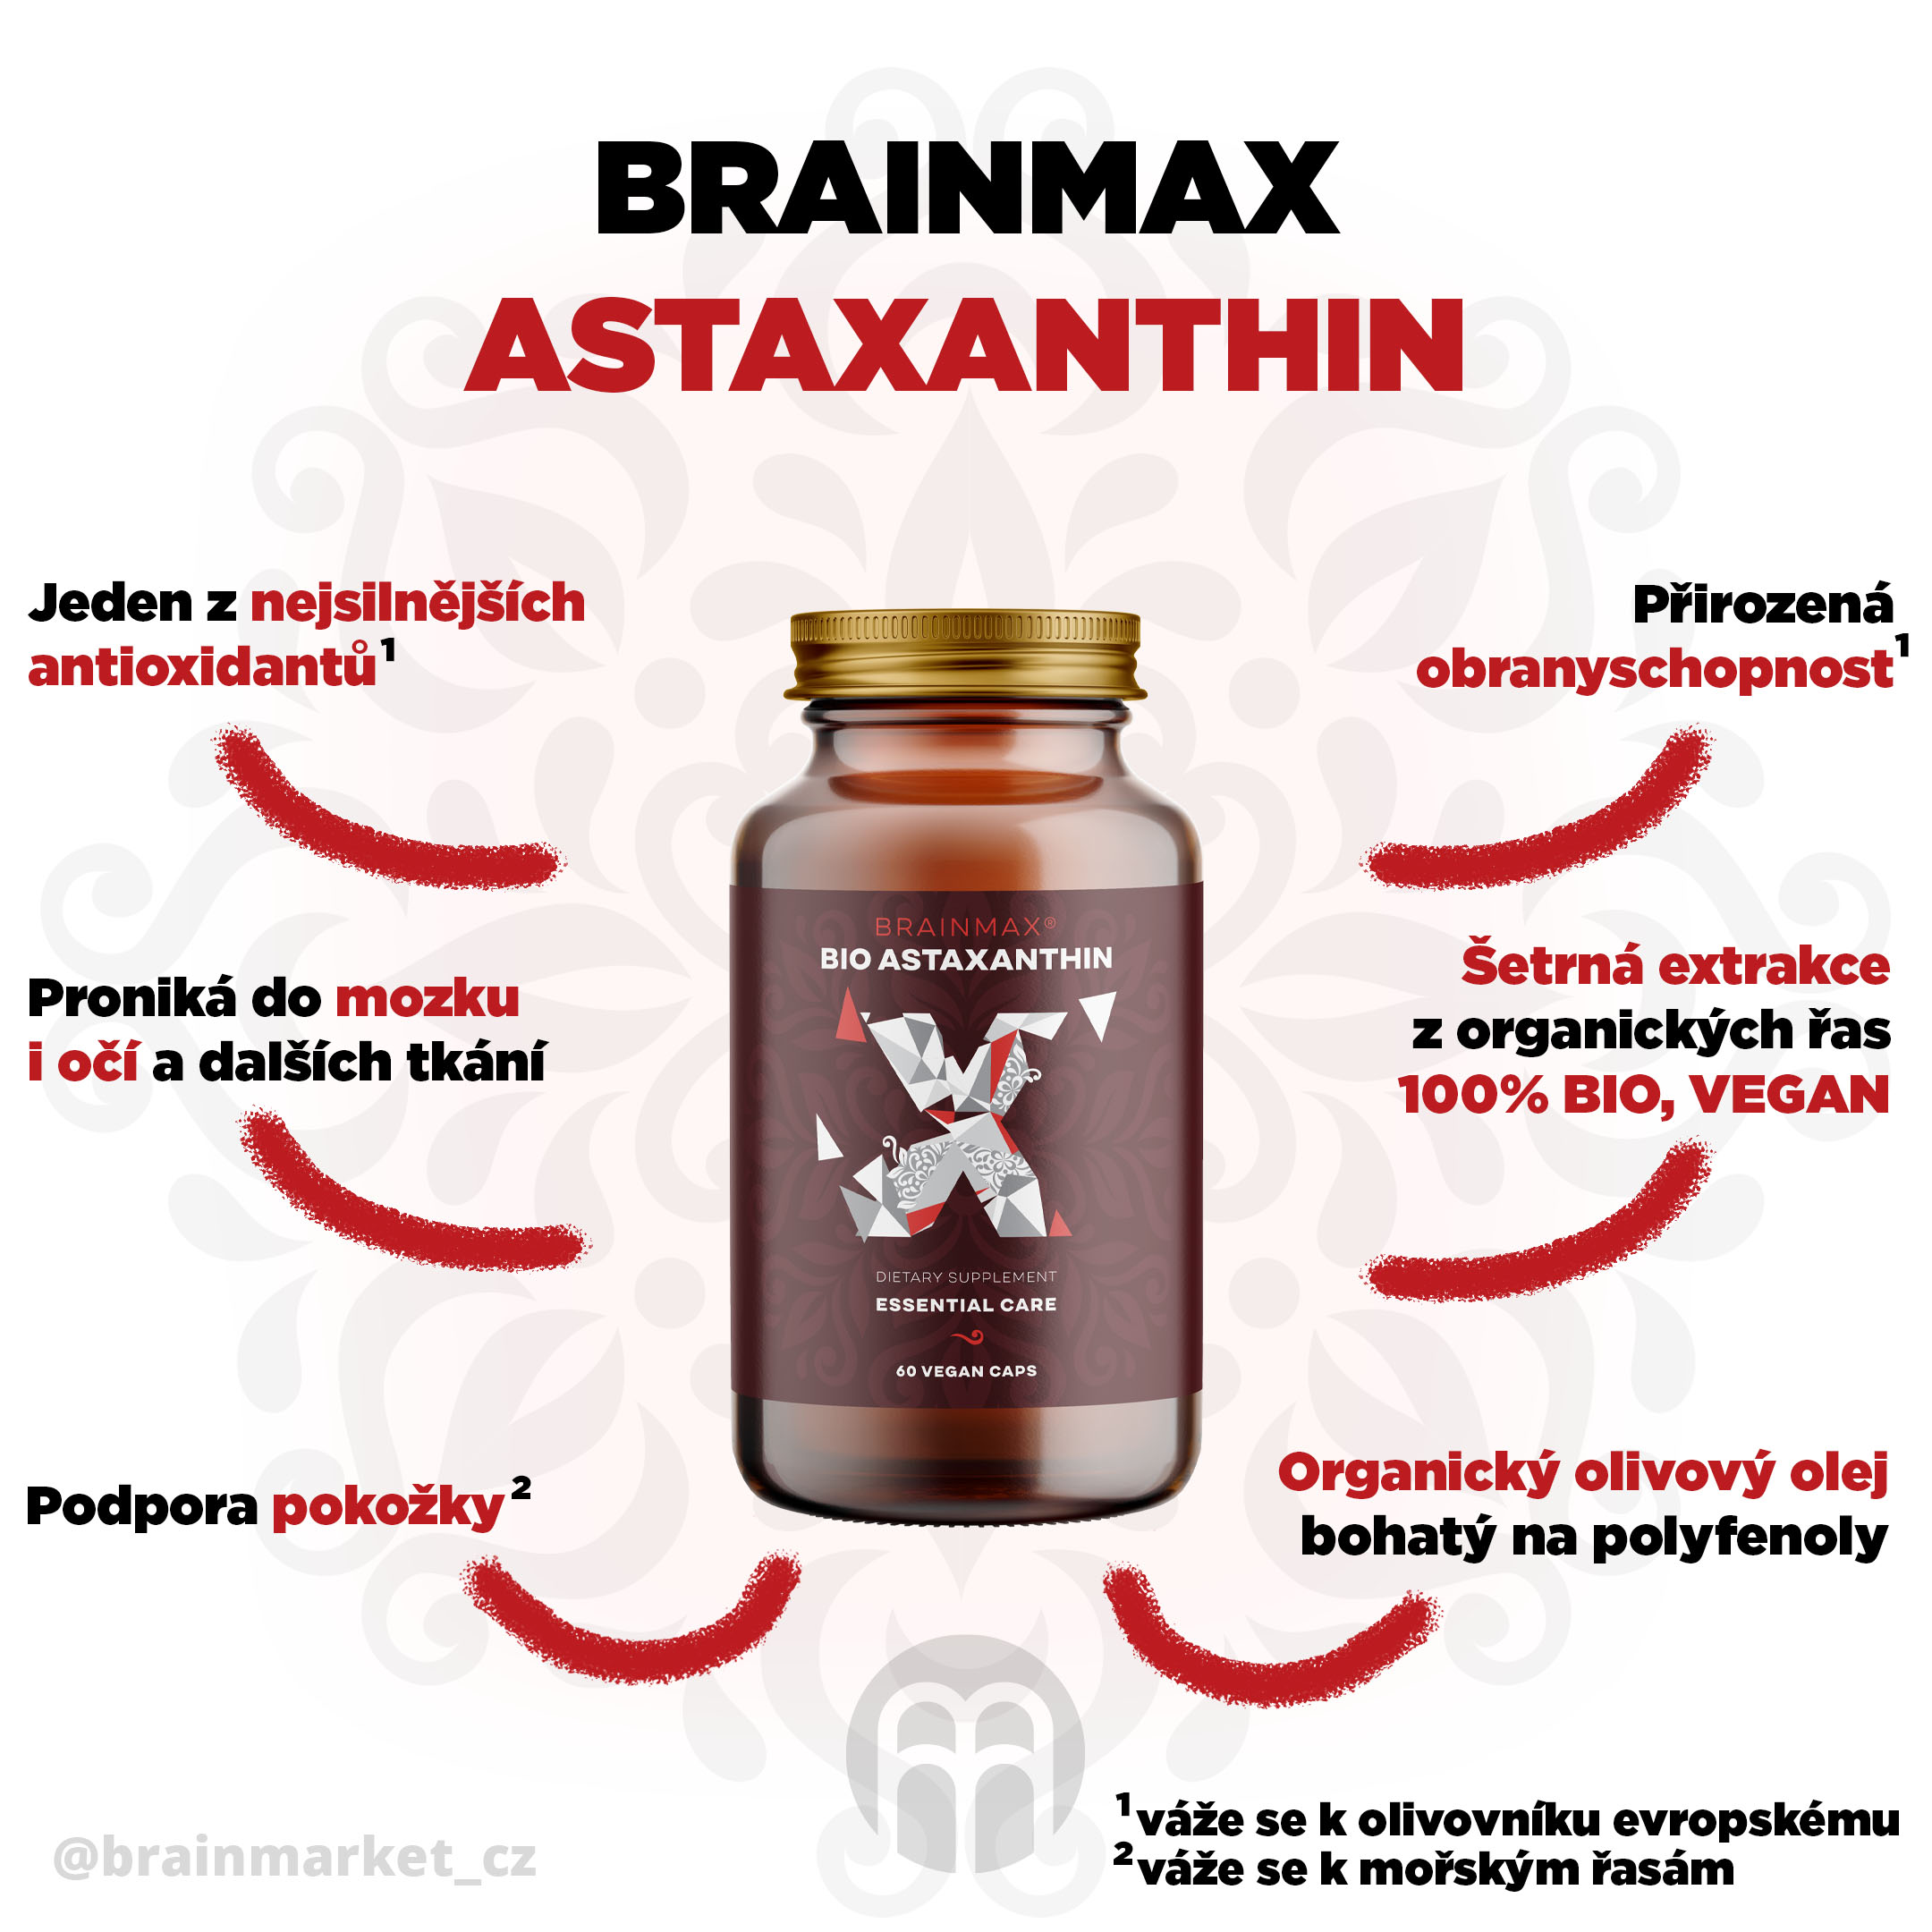 brainmax pure astaxanthin infographics (lost) brainmarket CZ